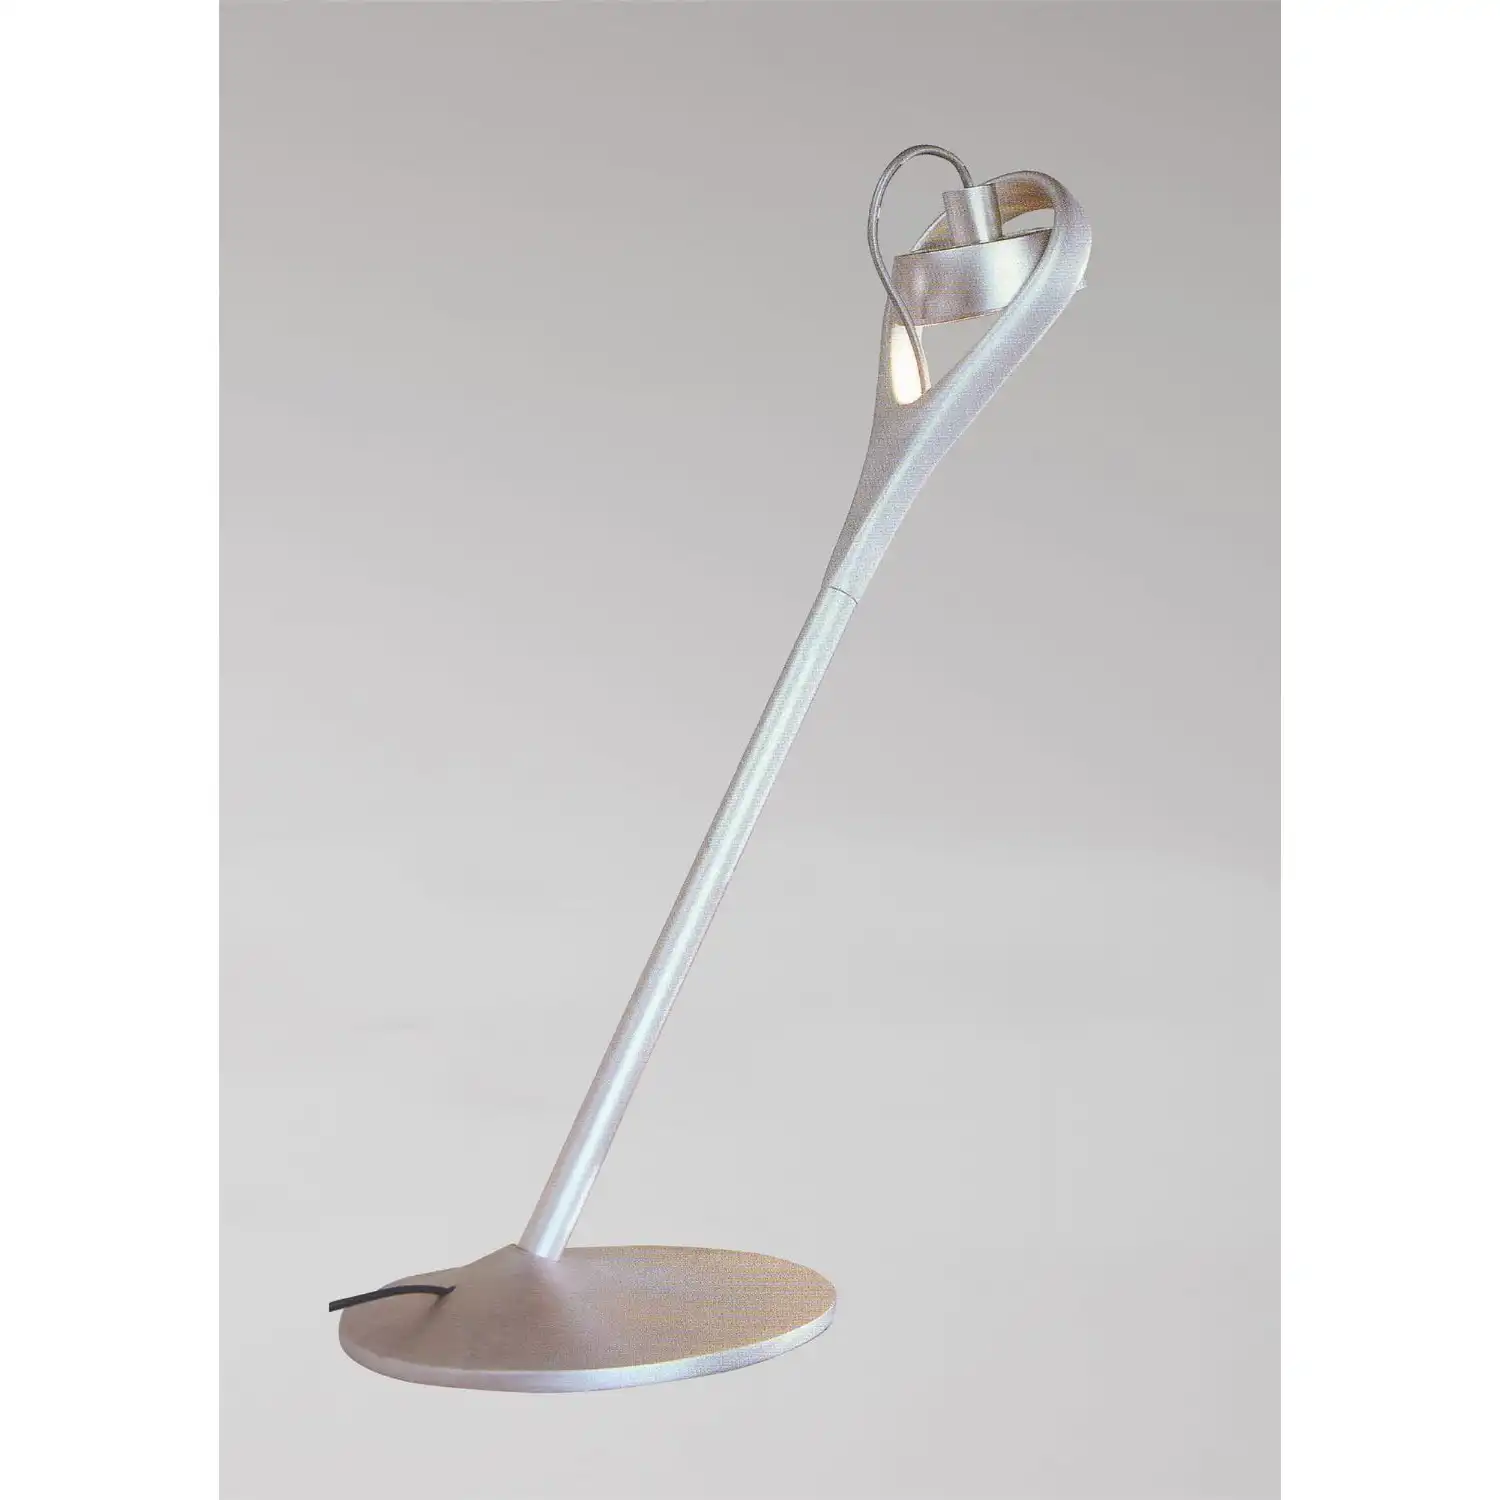 Rak Table Lamp 1 Light GU10 Ar111 75W Silver Grey